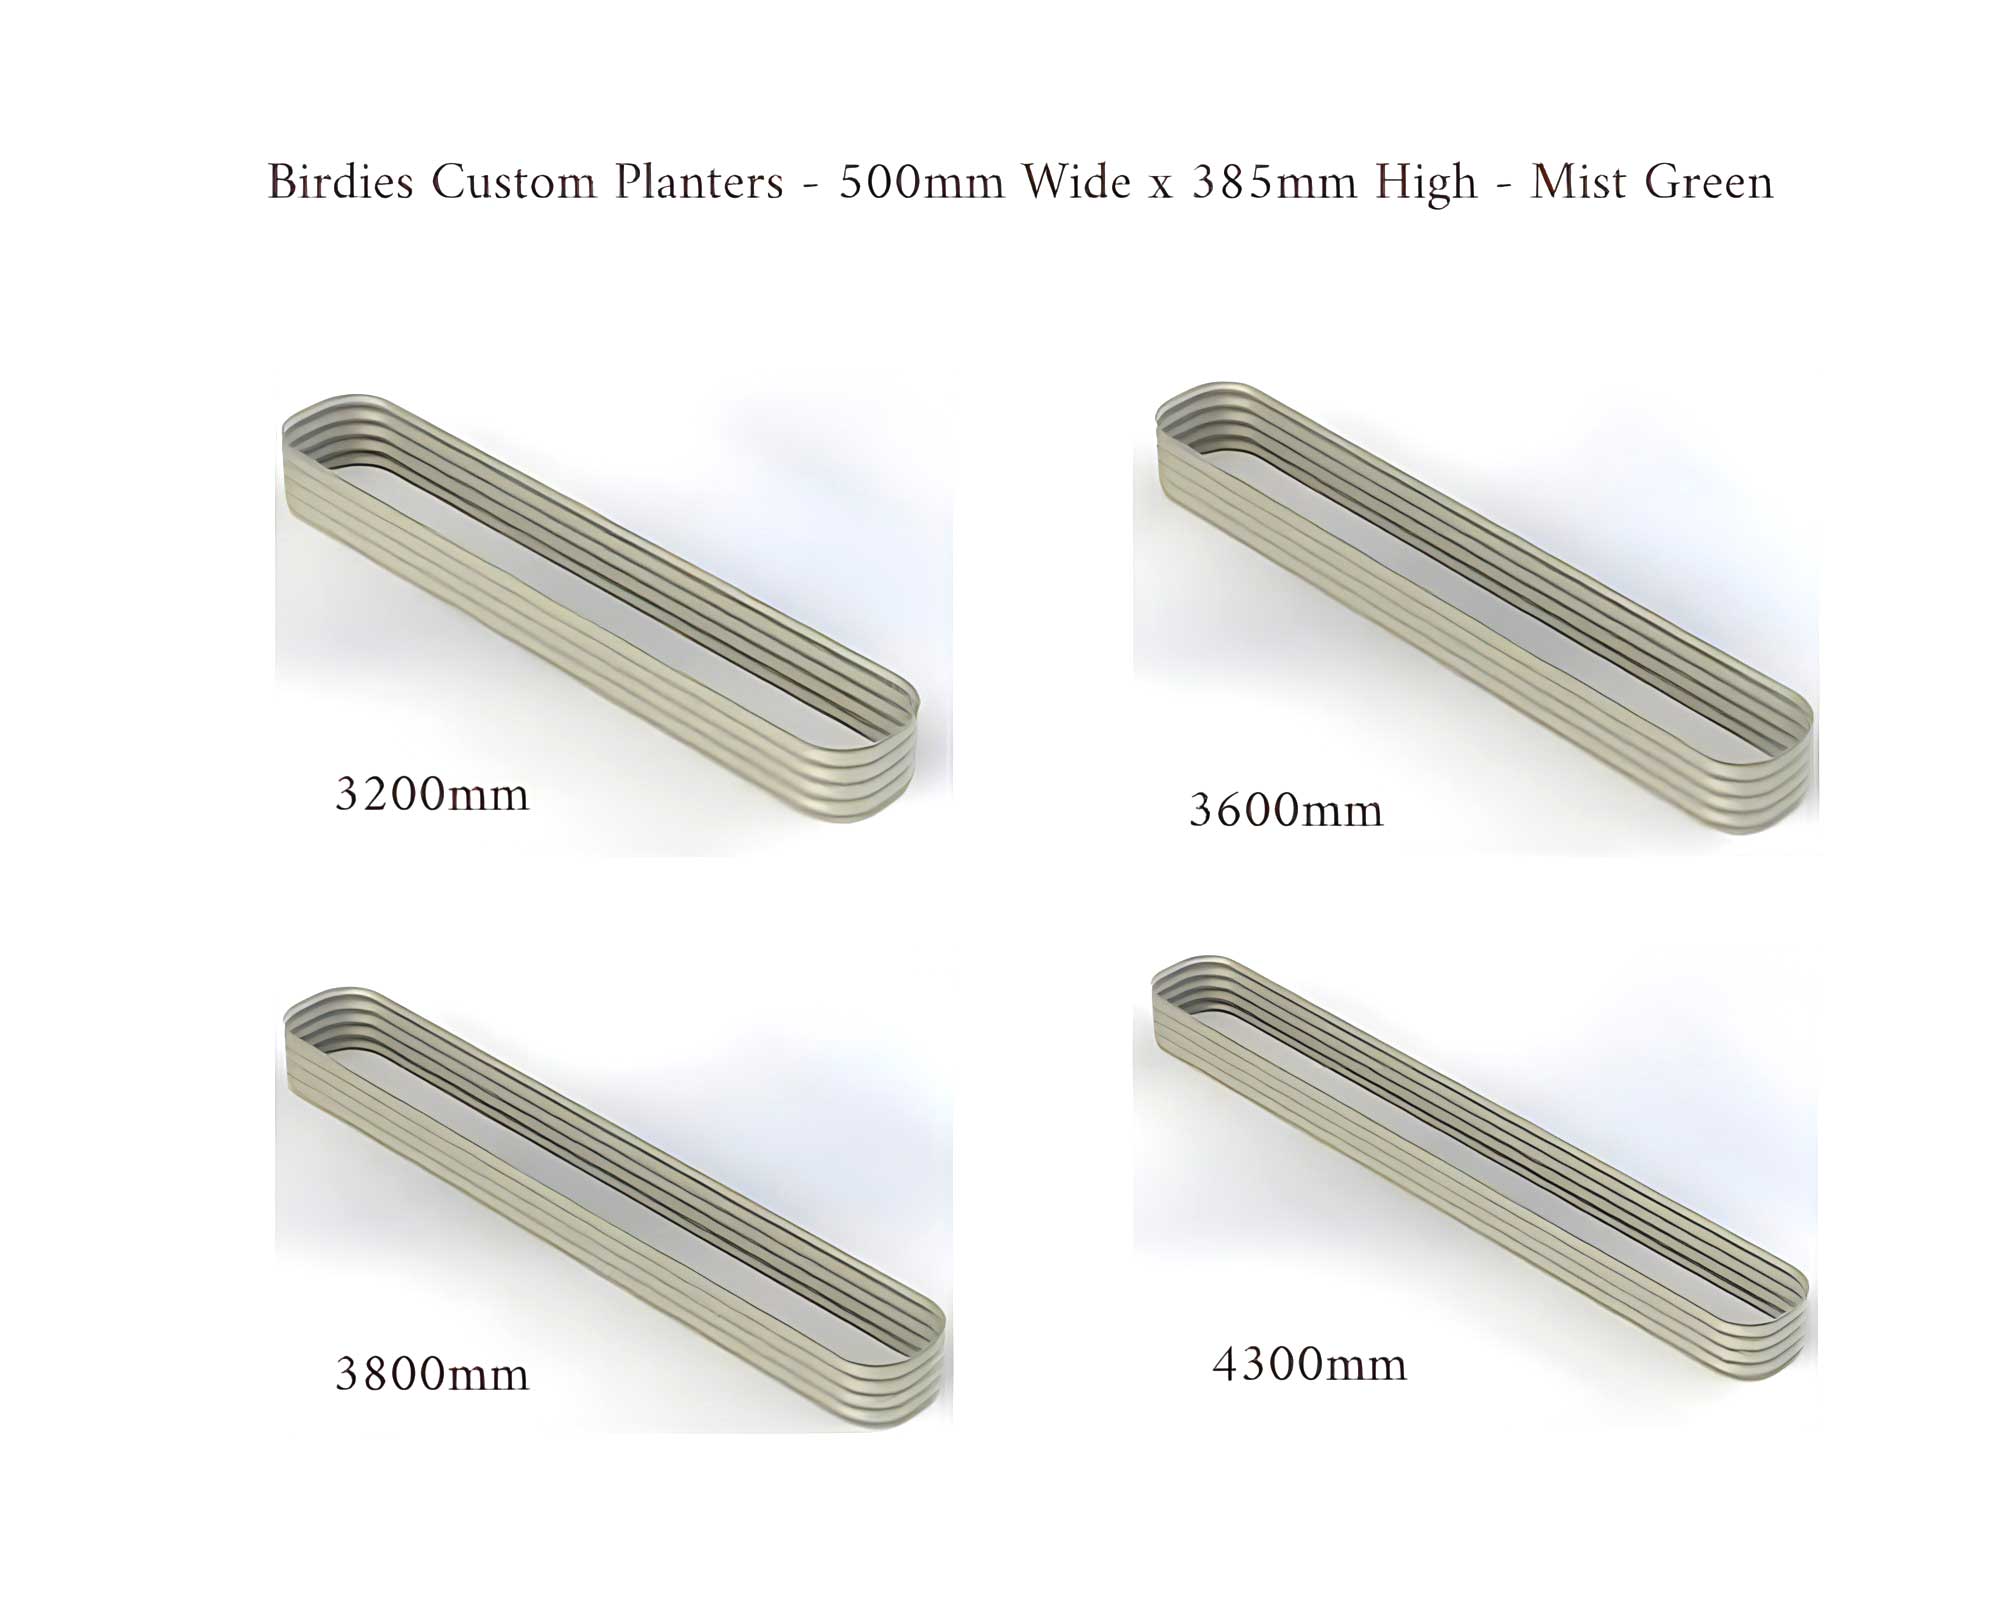 Birdies Custom Planters - 500mm Wide x 385mm High - Lengths: 3200mm, 3600mm, 3800mm, 4300mm - Mist Green